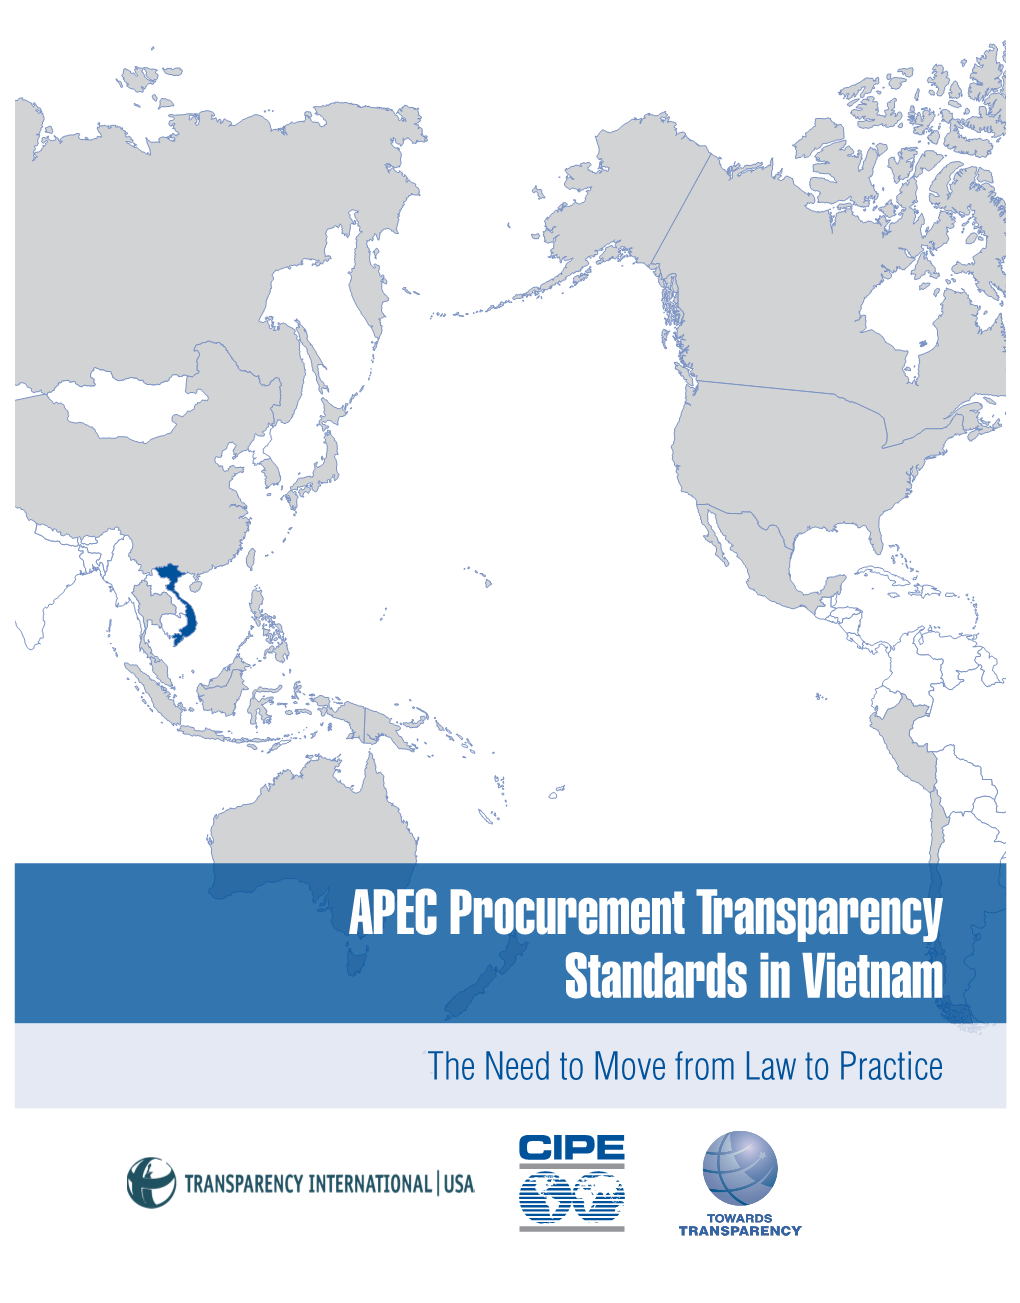 APEC Procurement Transparency Standards in Vietnam